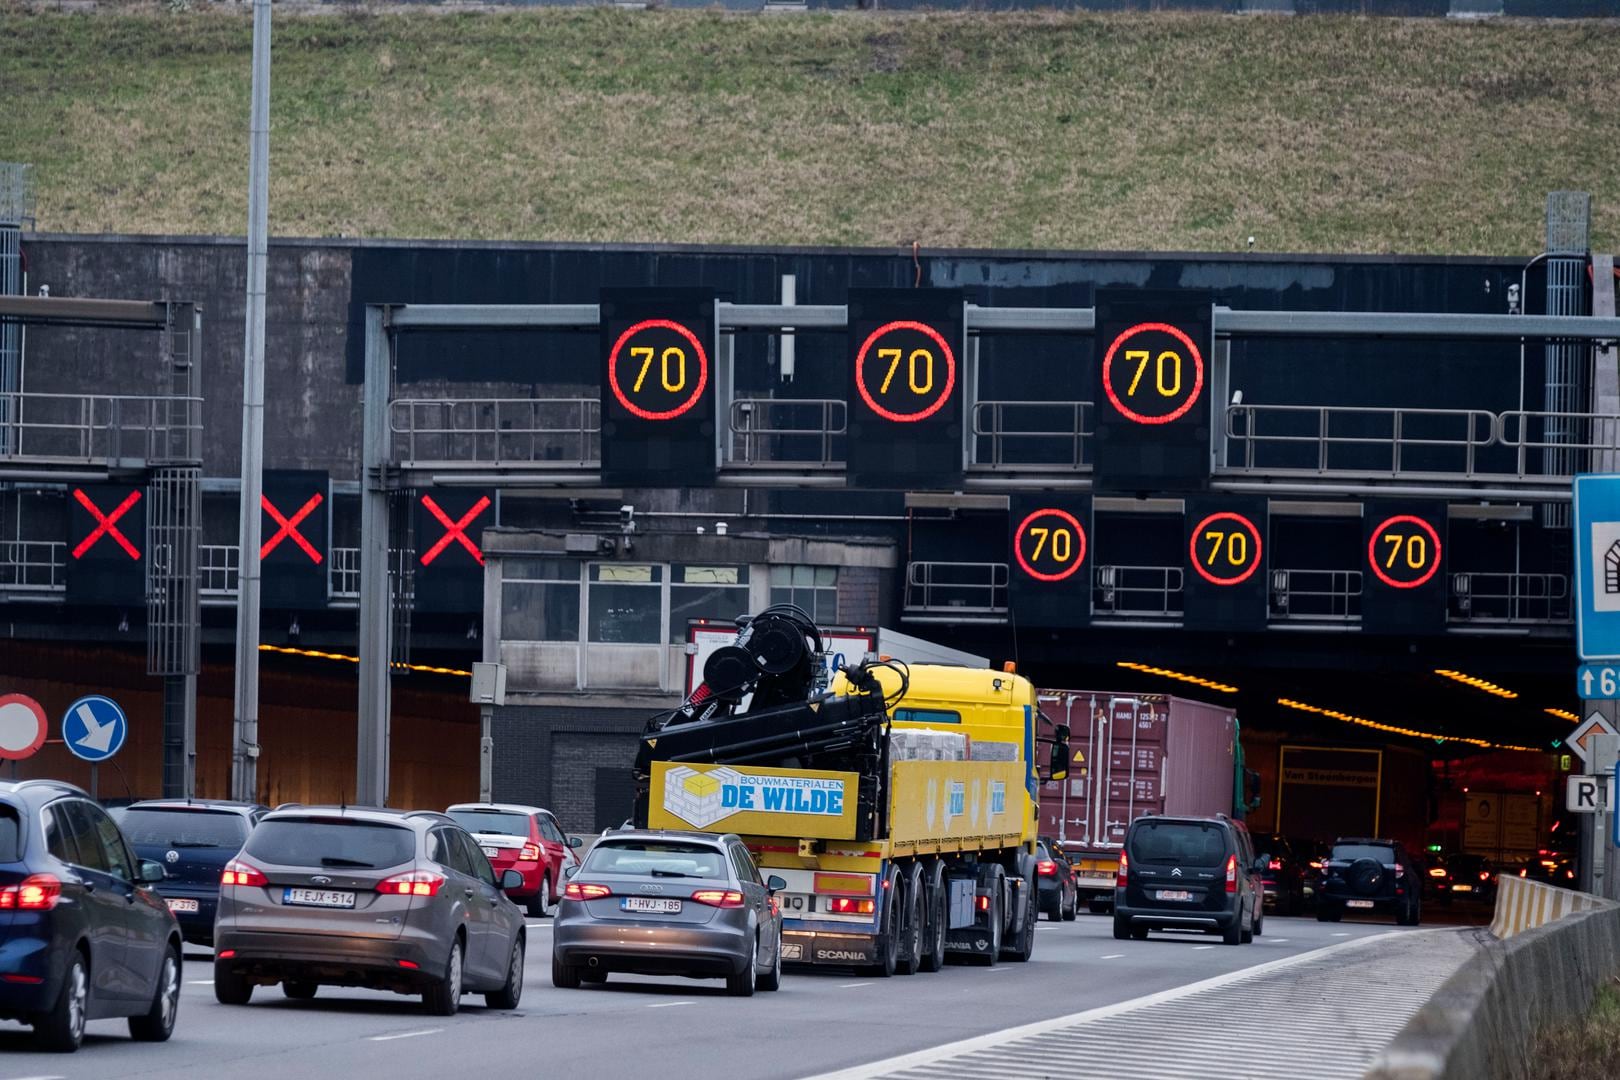 Tunnel richting Gent weer vrij, richting Nederland rijstrook nog dicht